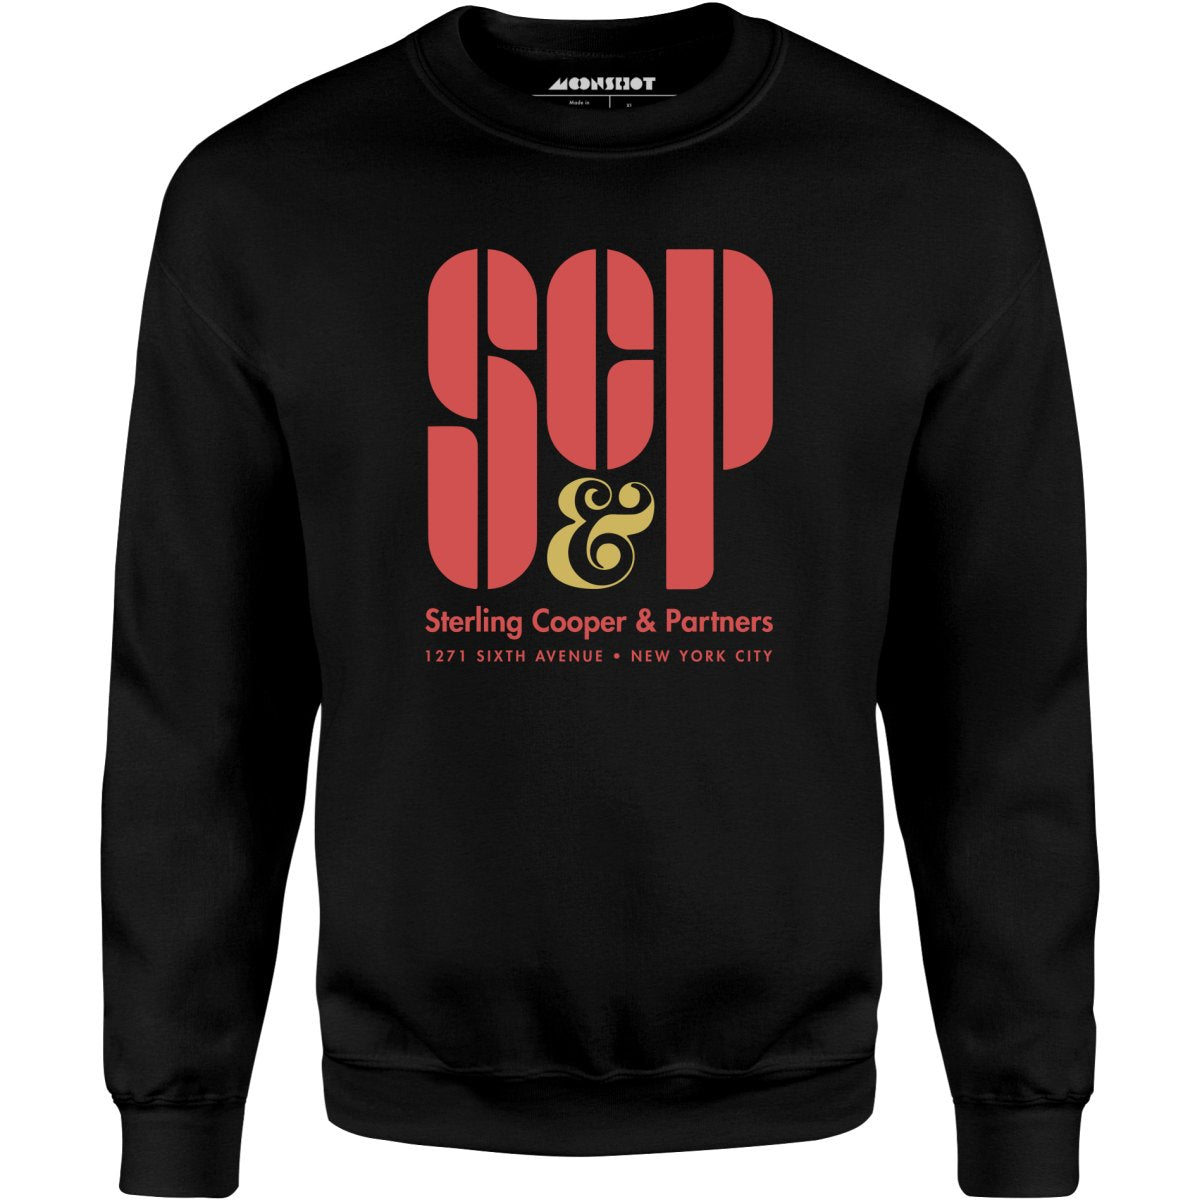 Sterling Cooper & Partners - Unisex Sweatshirt